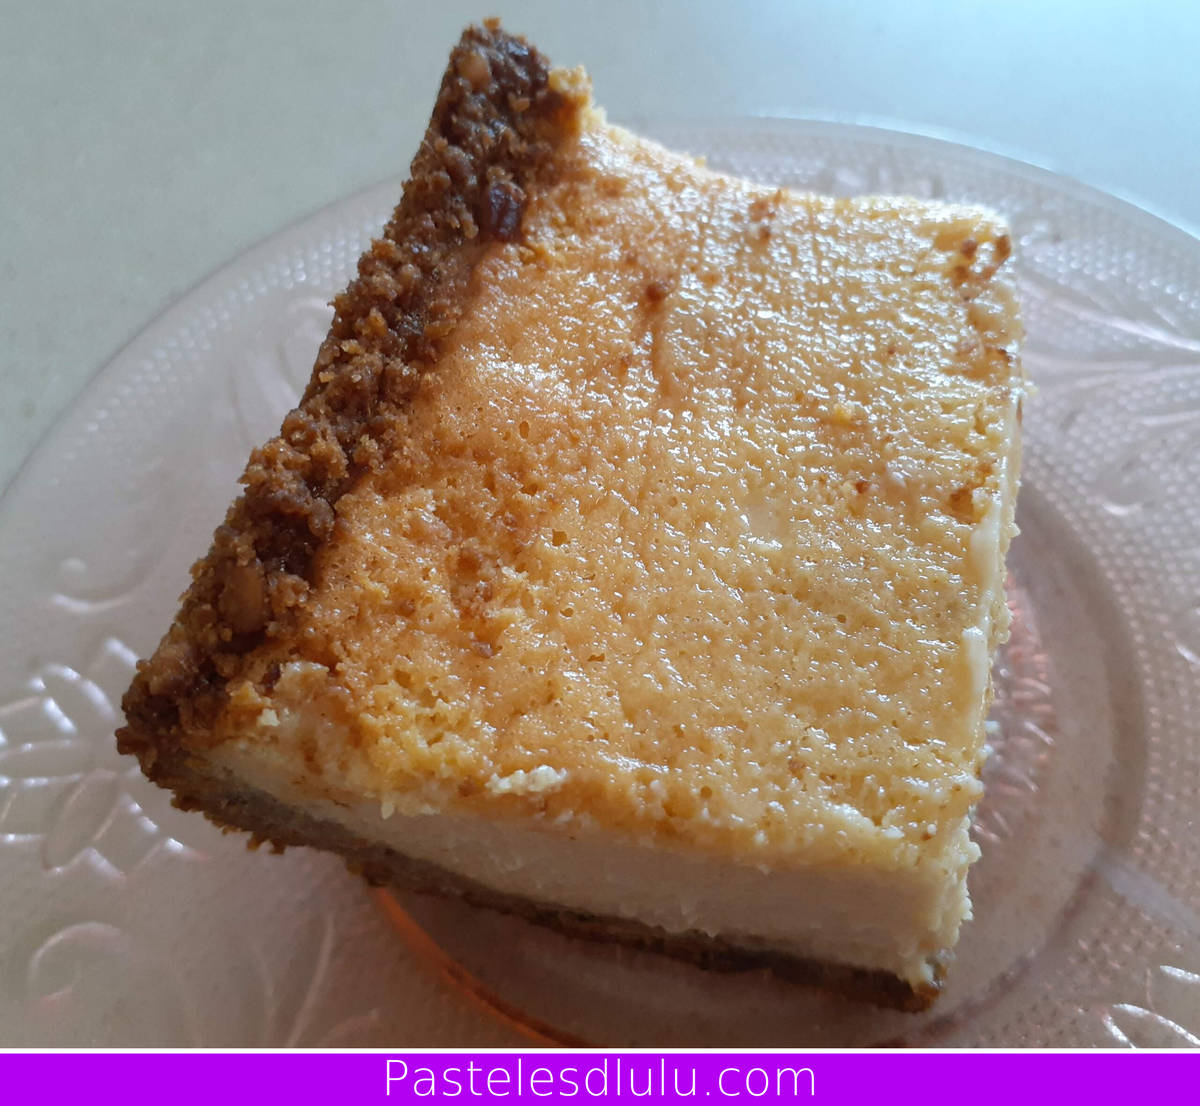 Photo of a cheesecake slice